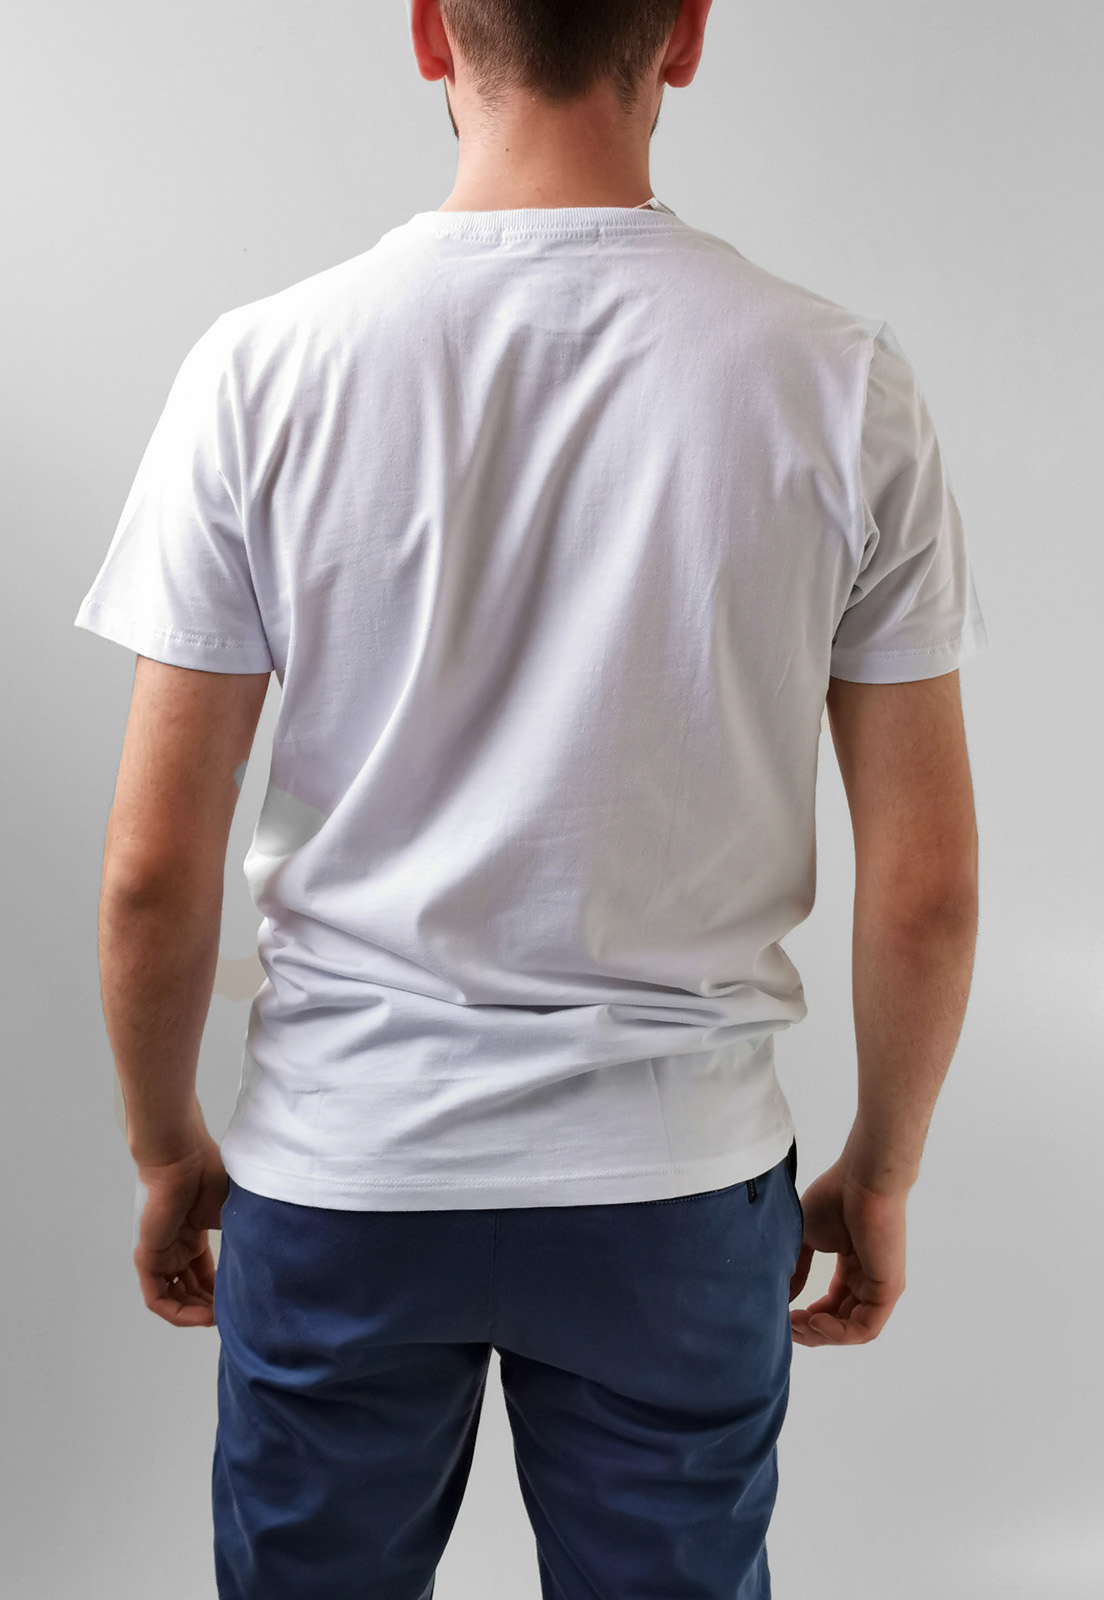 Camiseta Colcci Branco Clothing Brazil